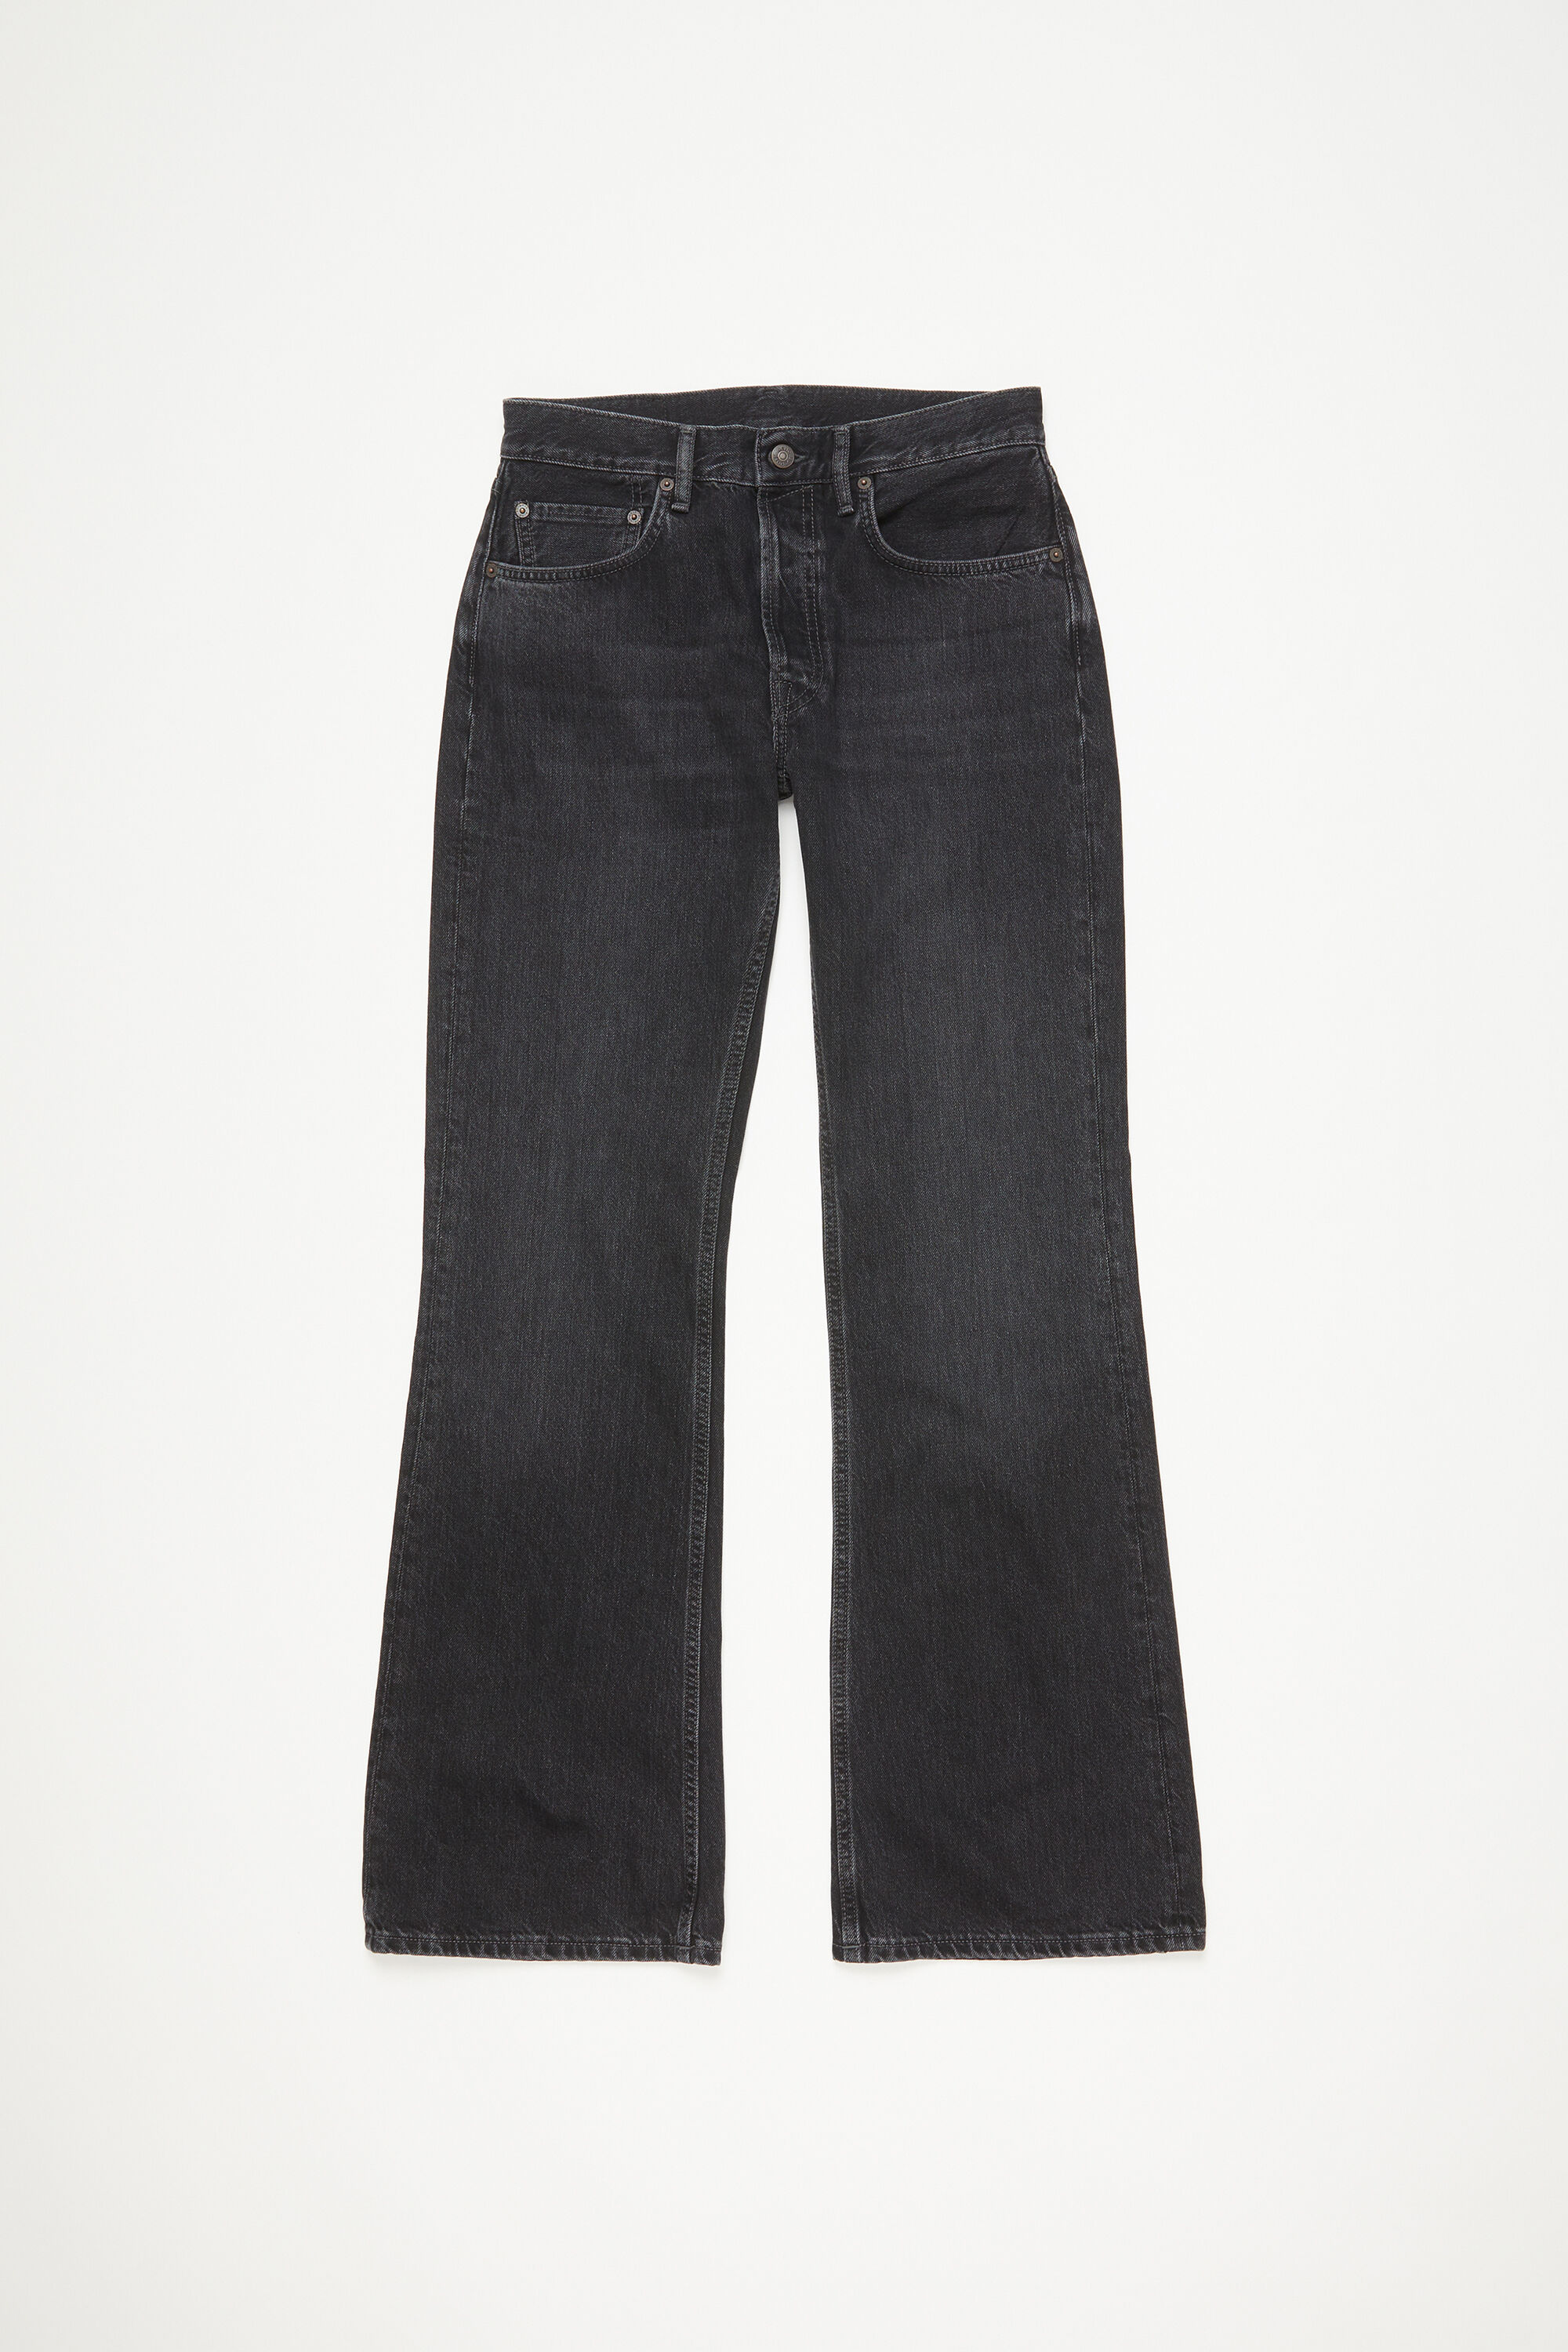 Acne Studios - Regular fit jeans